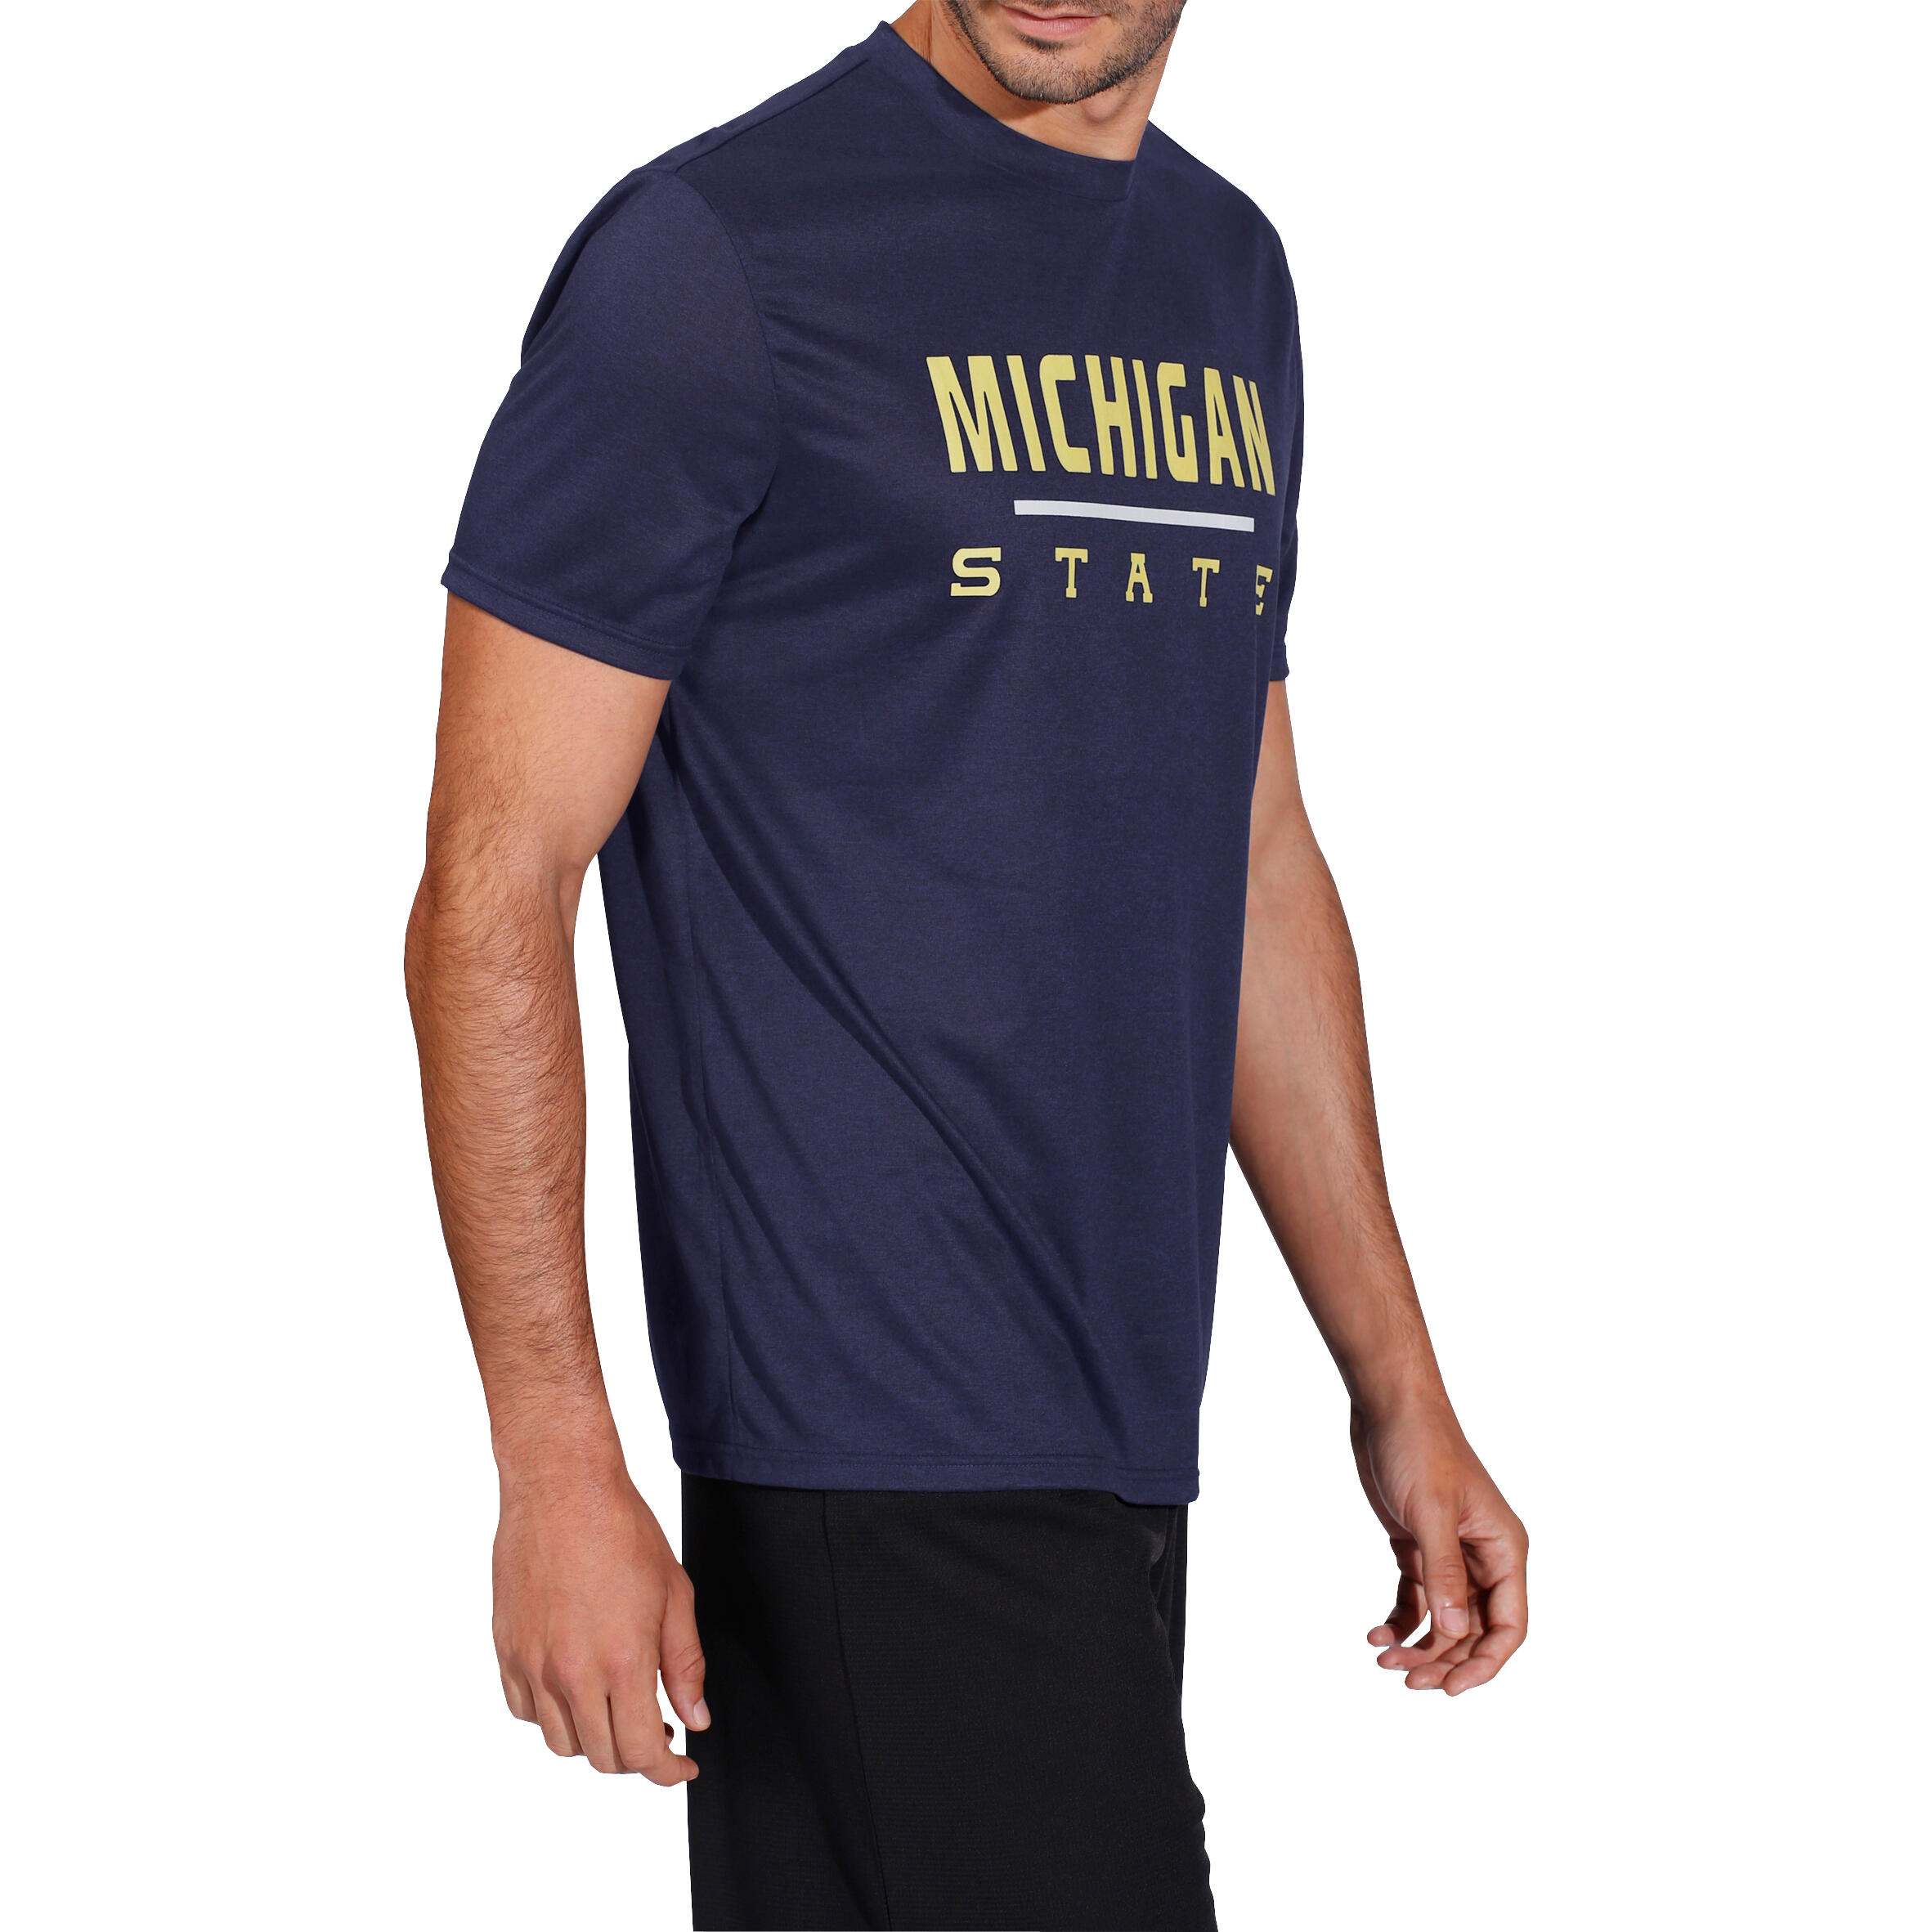 Fast Michigan Men's Basketball T-shirt - Blue Yellow 5/12